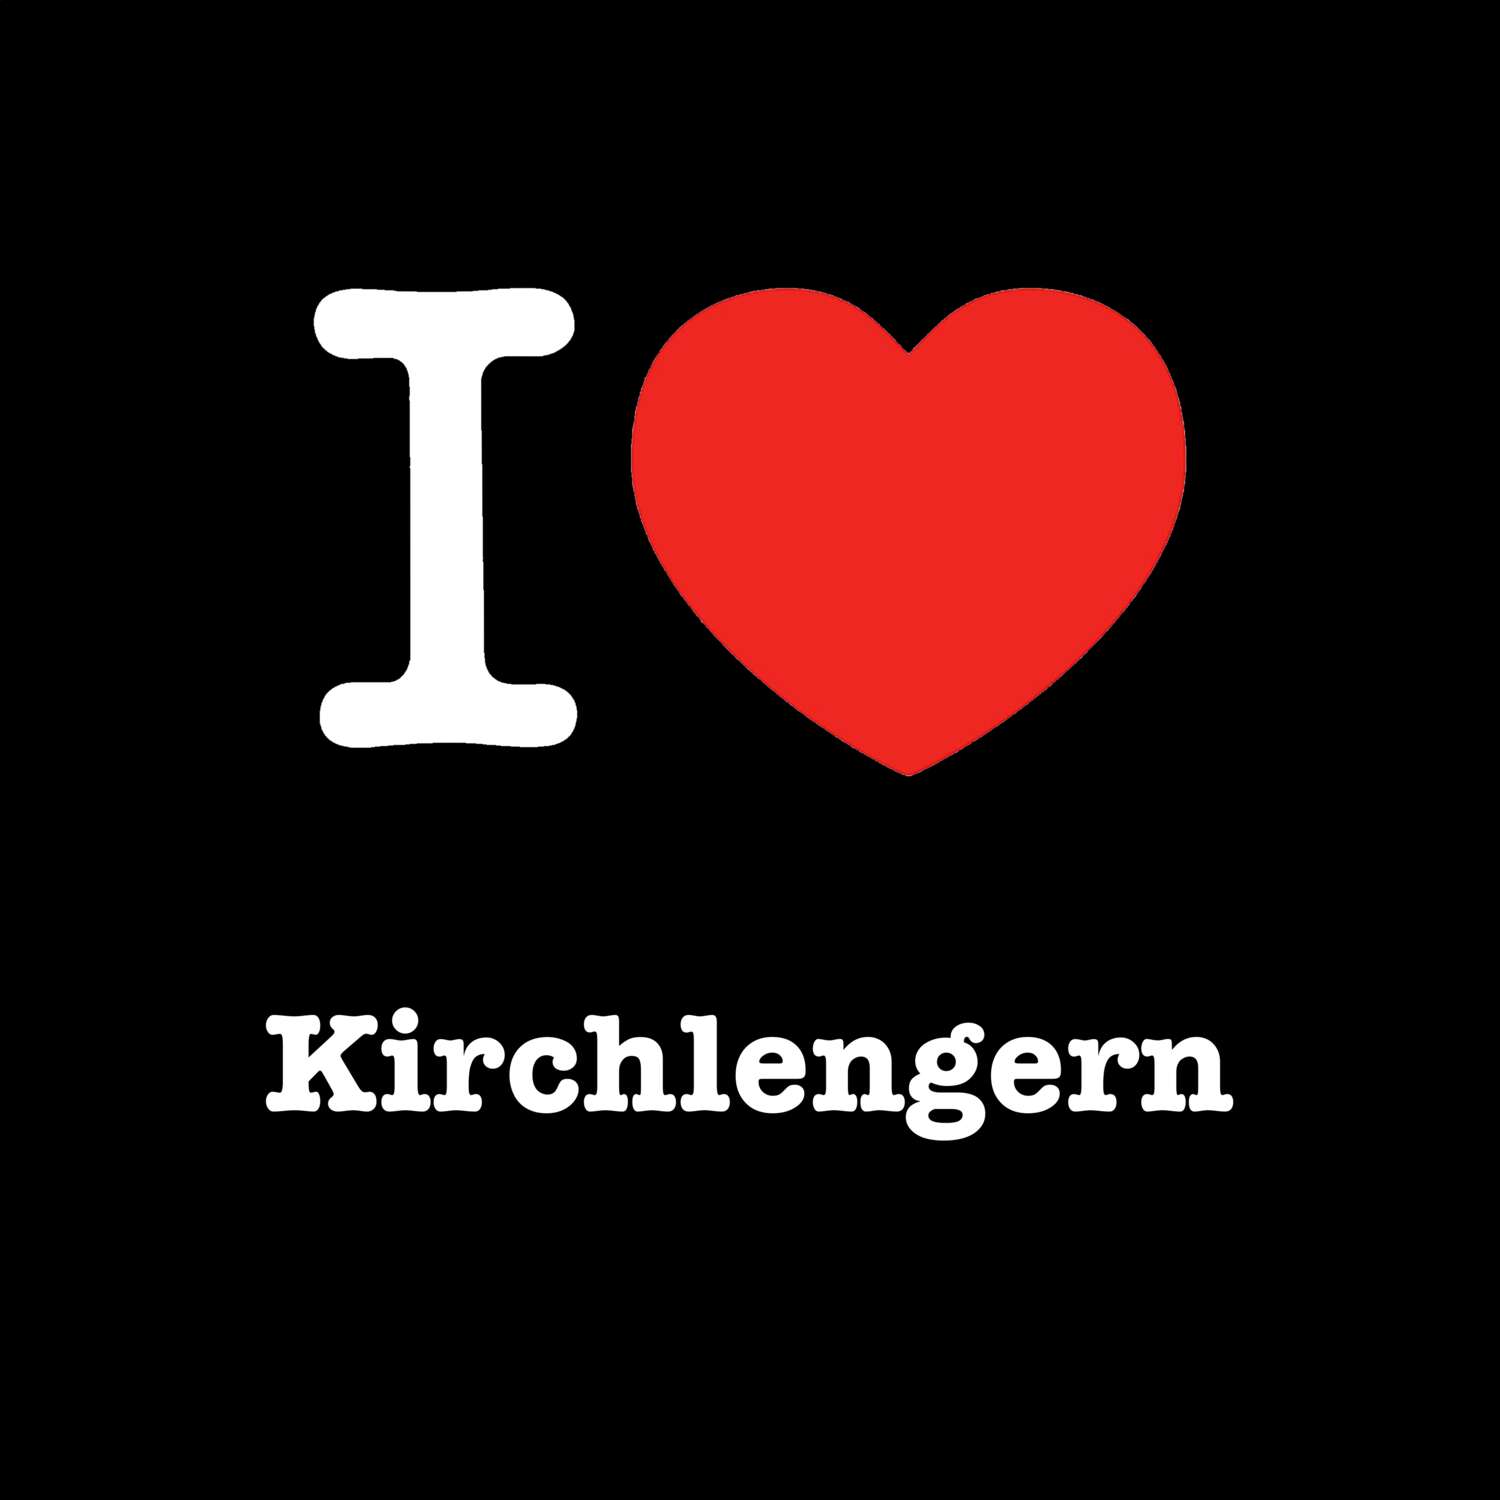 Kirchlengern T-Shirt »I love«